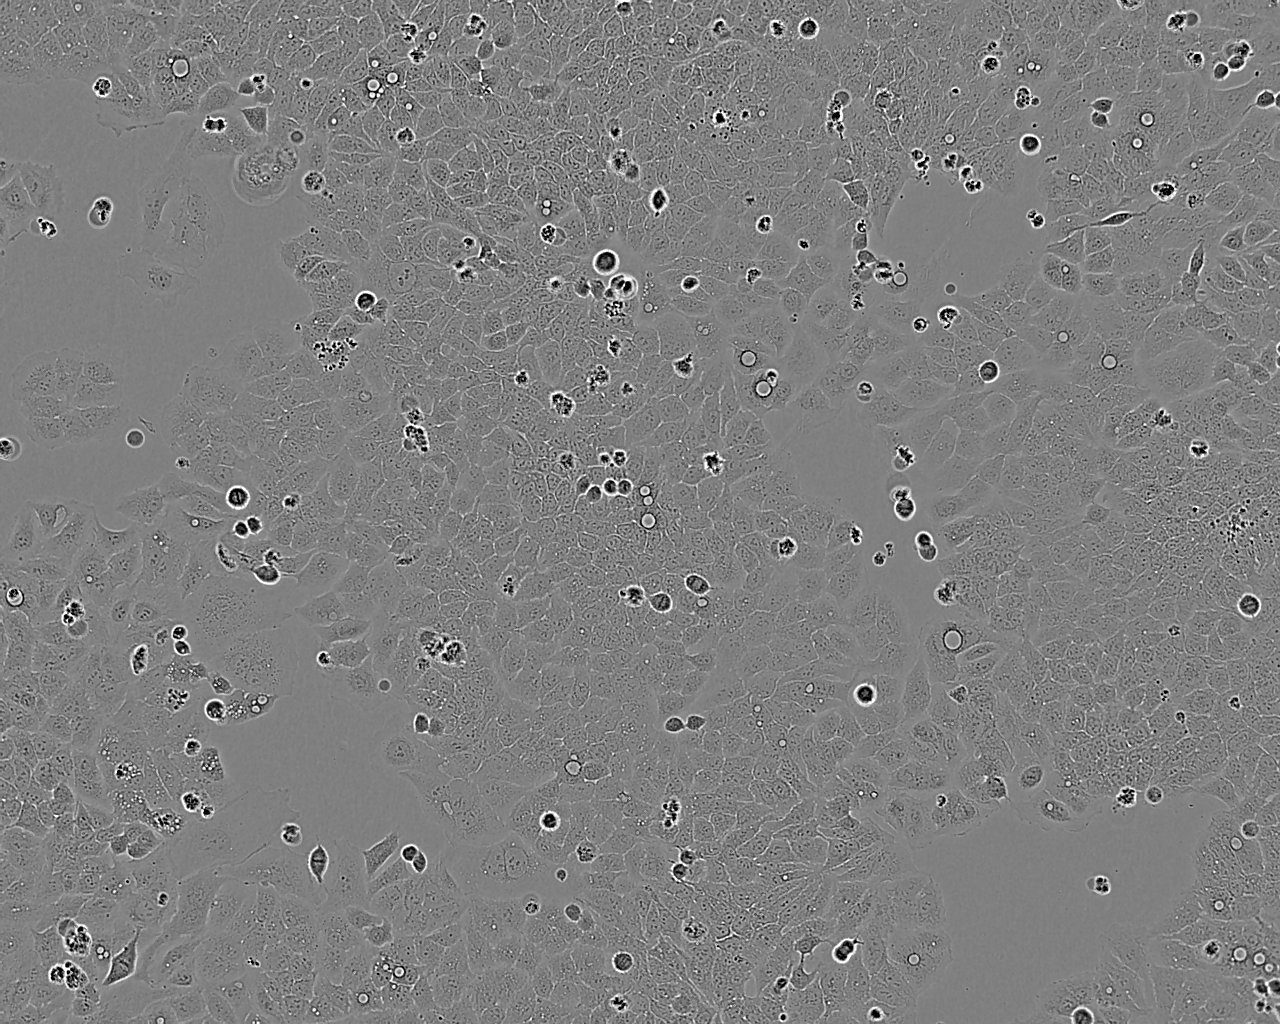 GB-1 Cell:人脑胶质母细胞瘤细胞系